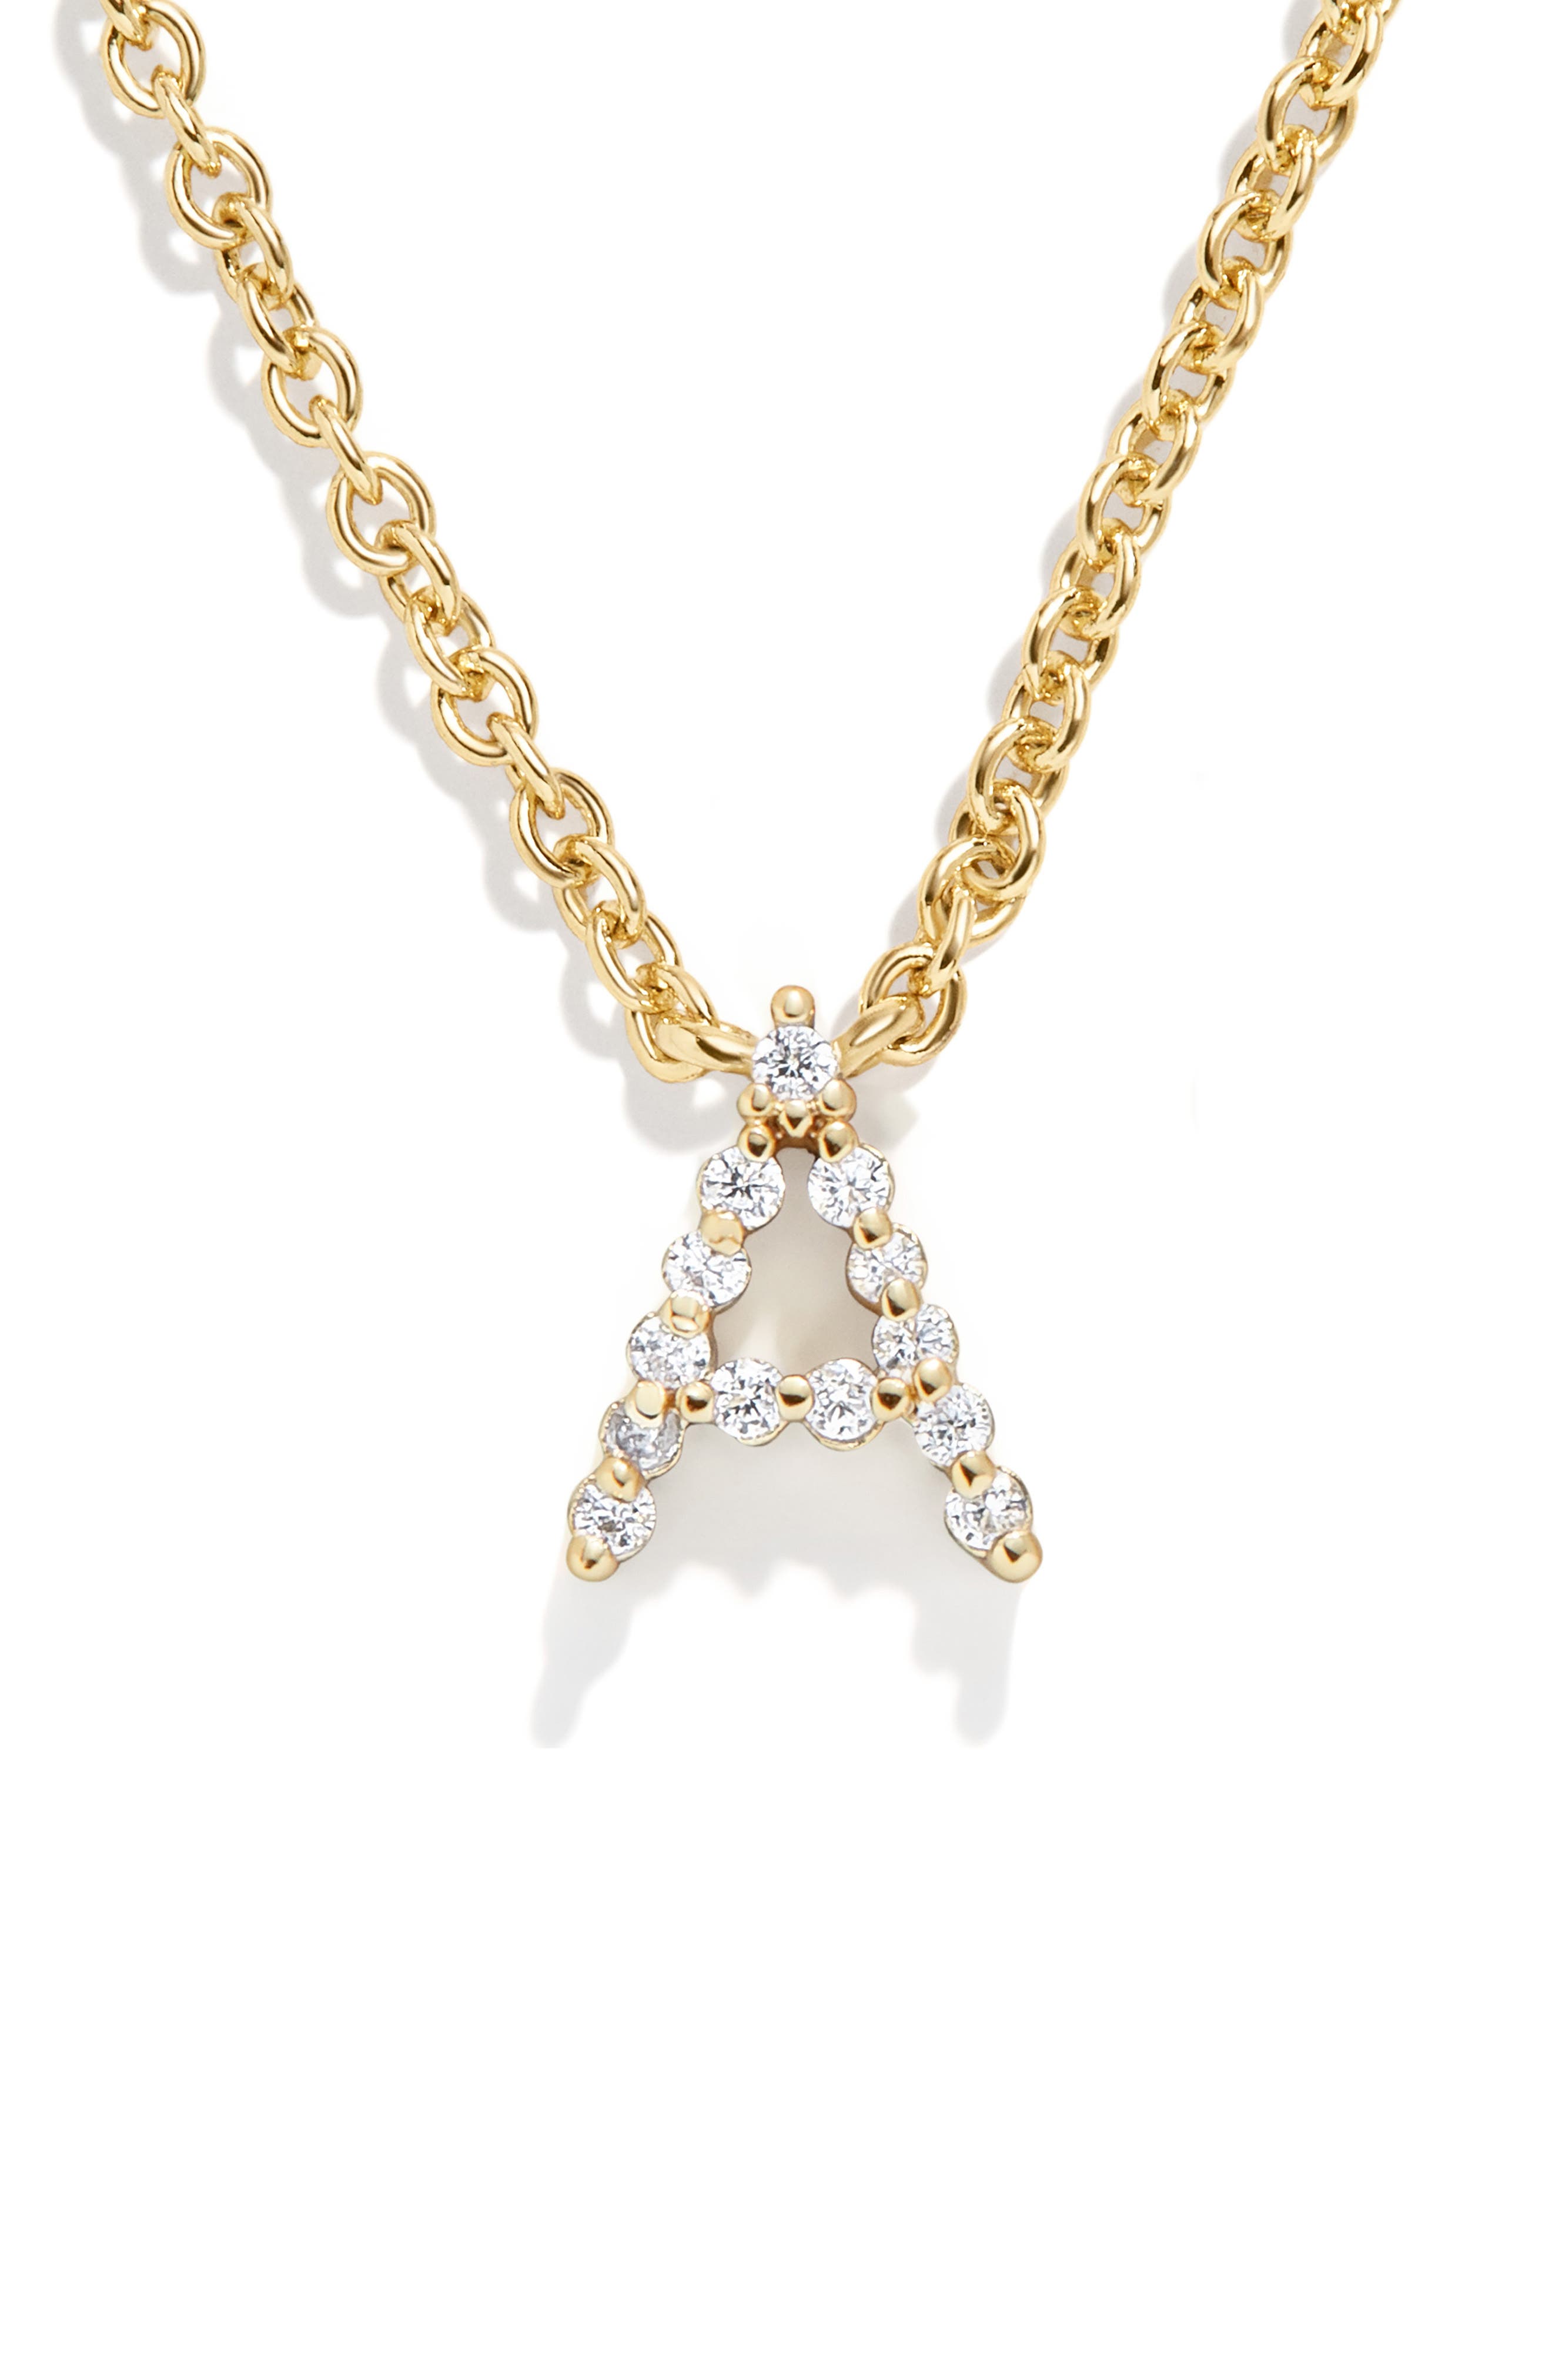 Rose Flower Jewelry CROSS Crystal Pendant Sweater Chain Necklace Women 